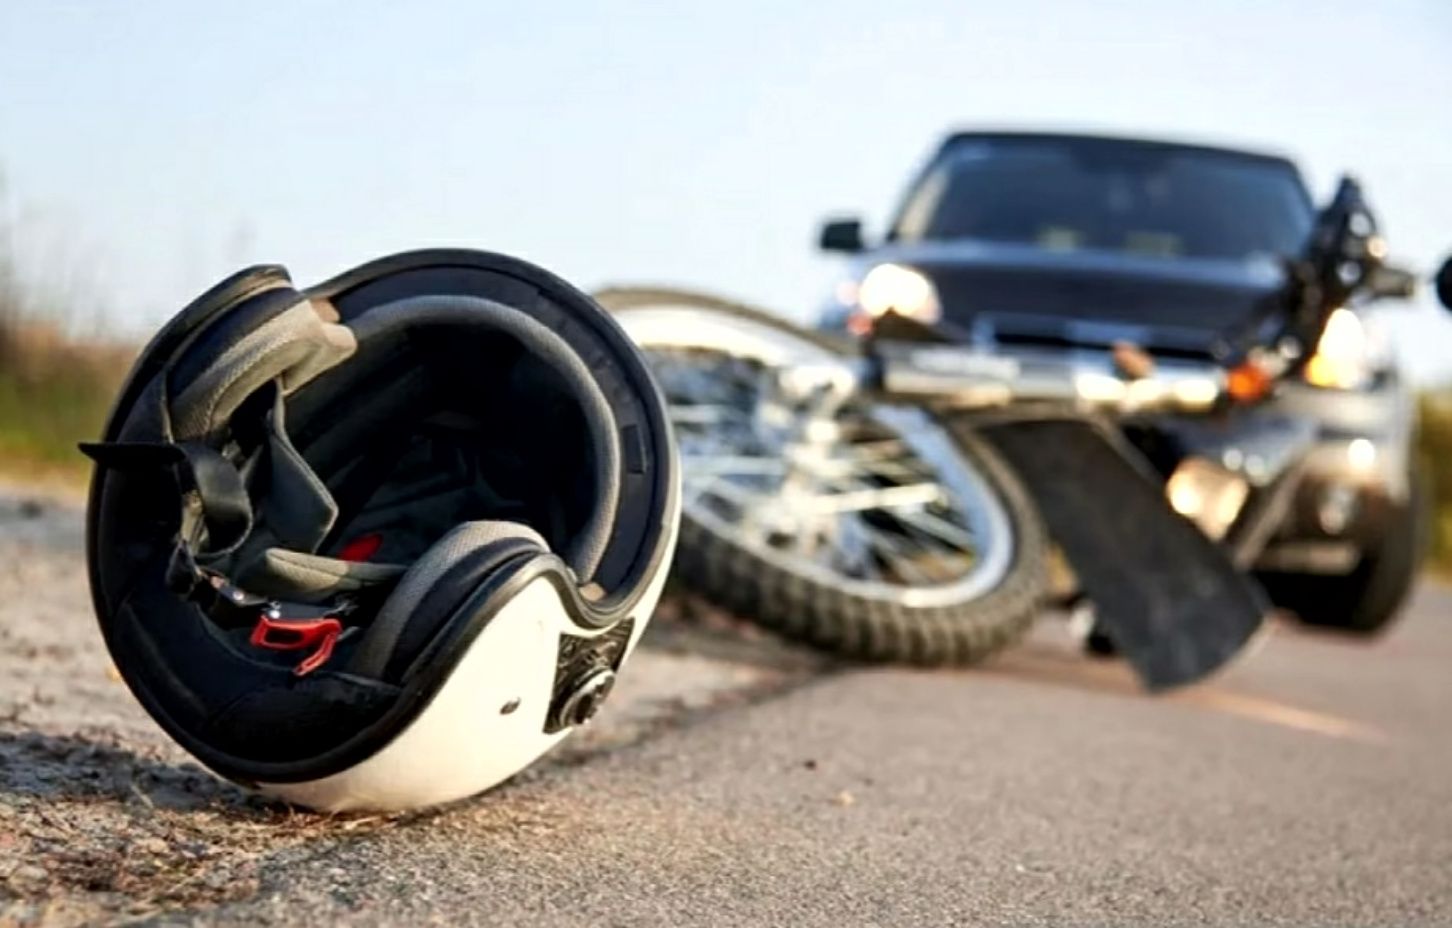 Ilustrasi - Kecelakaan sepeda motor di jalan. /ANTARA/Shutterstock.